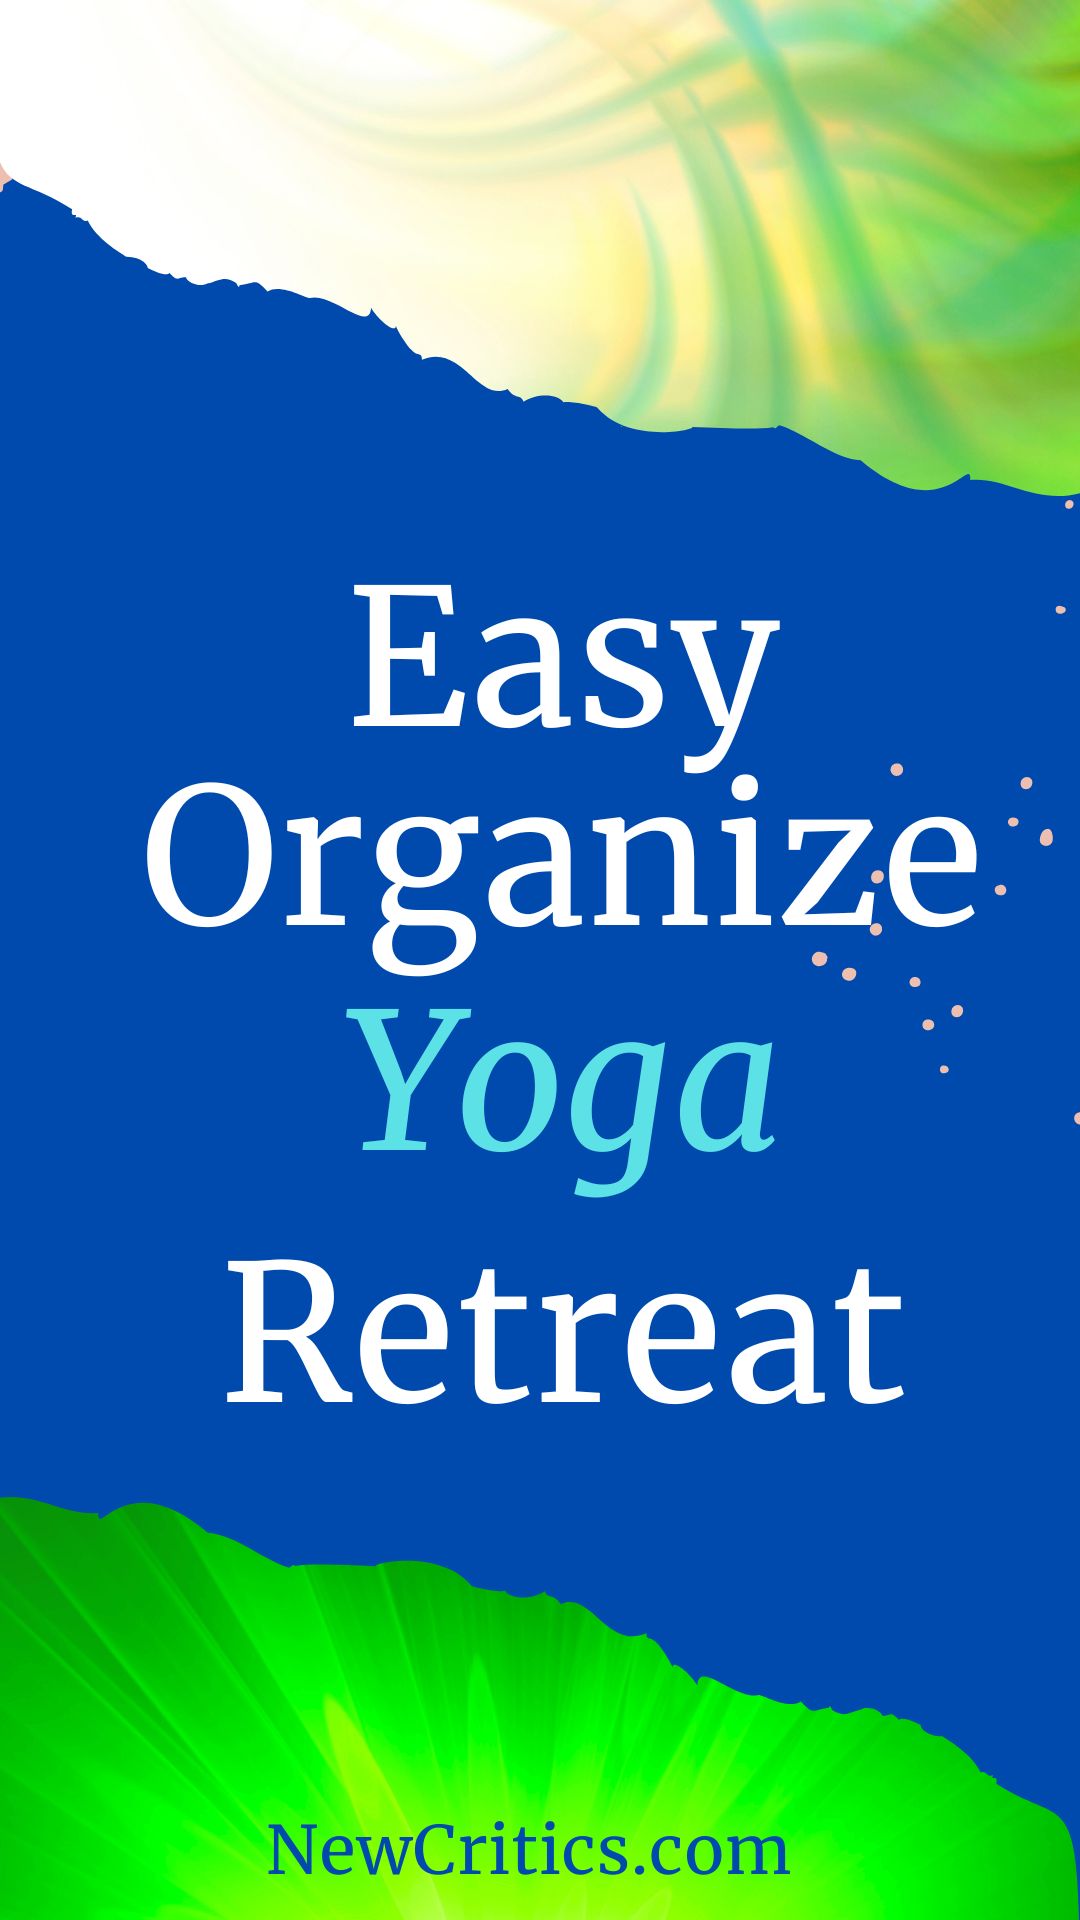 Easy Organize Yoga Retreat / Canva